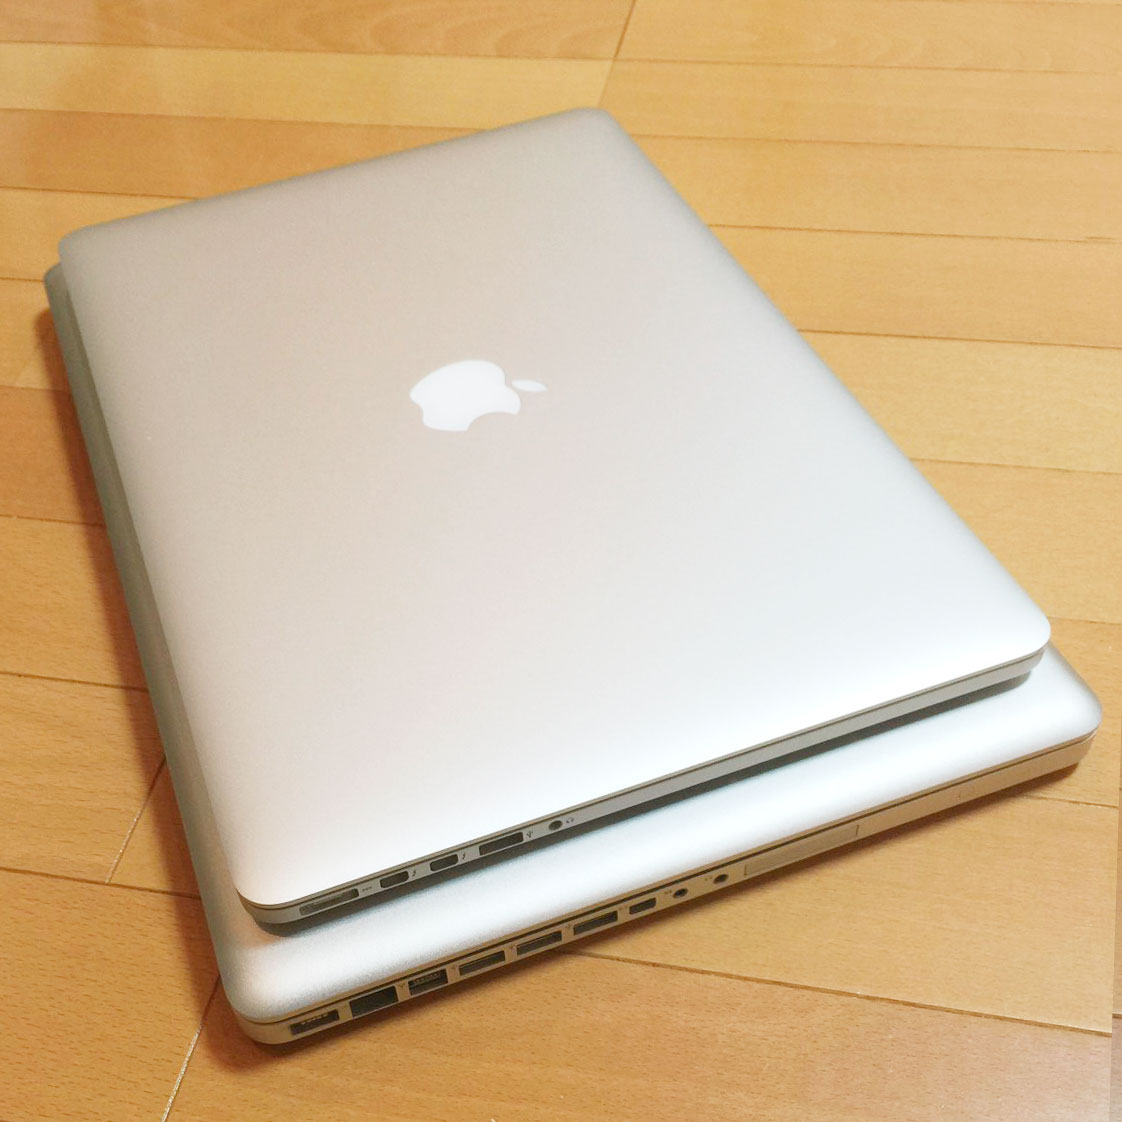 MacBook Pro Retinaディスプレイモデル15インチとMacBook Pro 17インチの比較